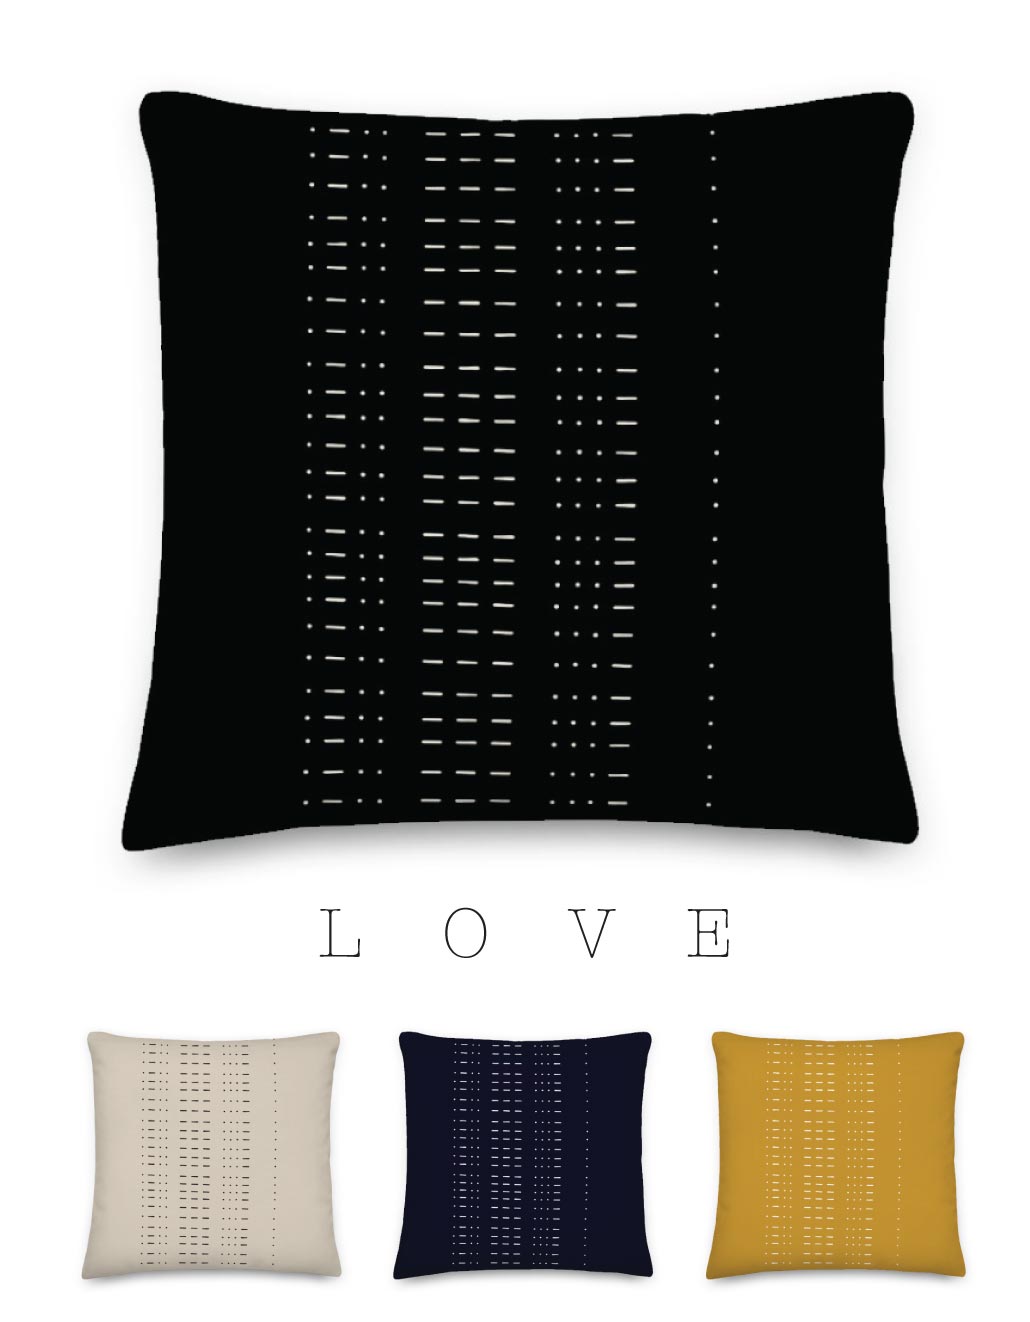 Coded Love – black morse code “LOVE” pillow